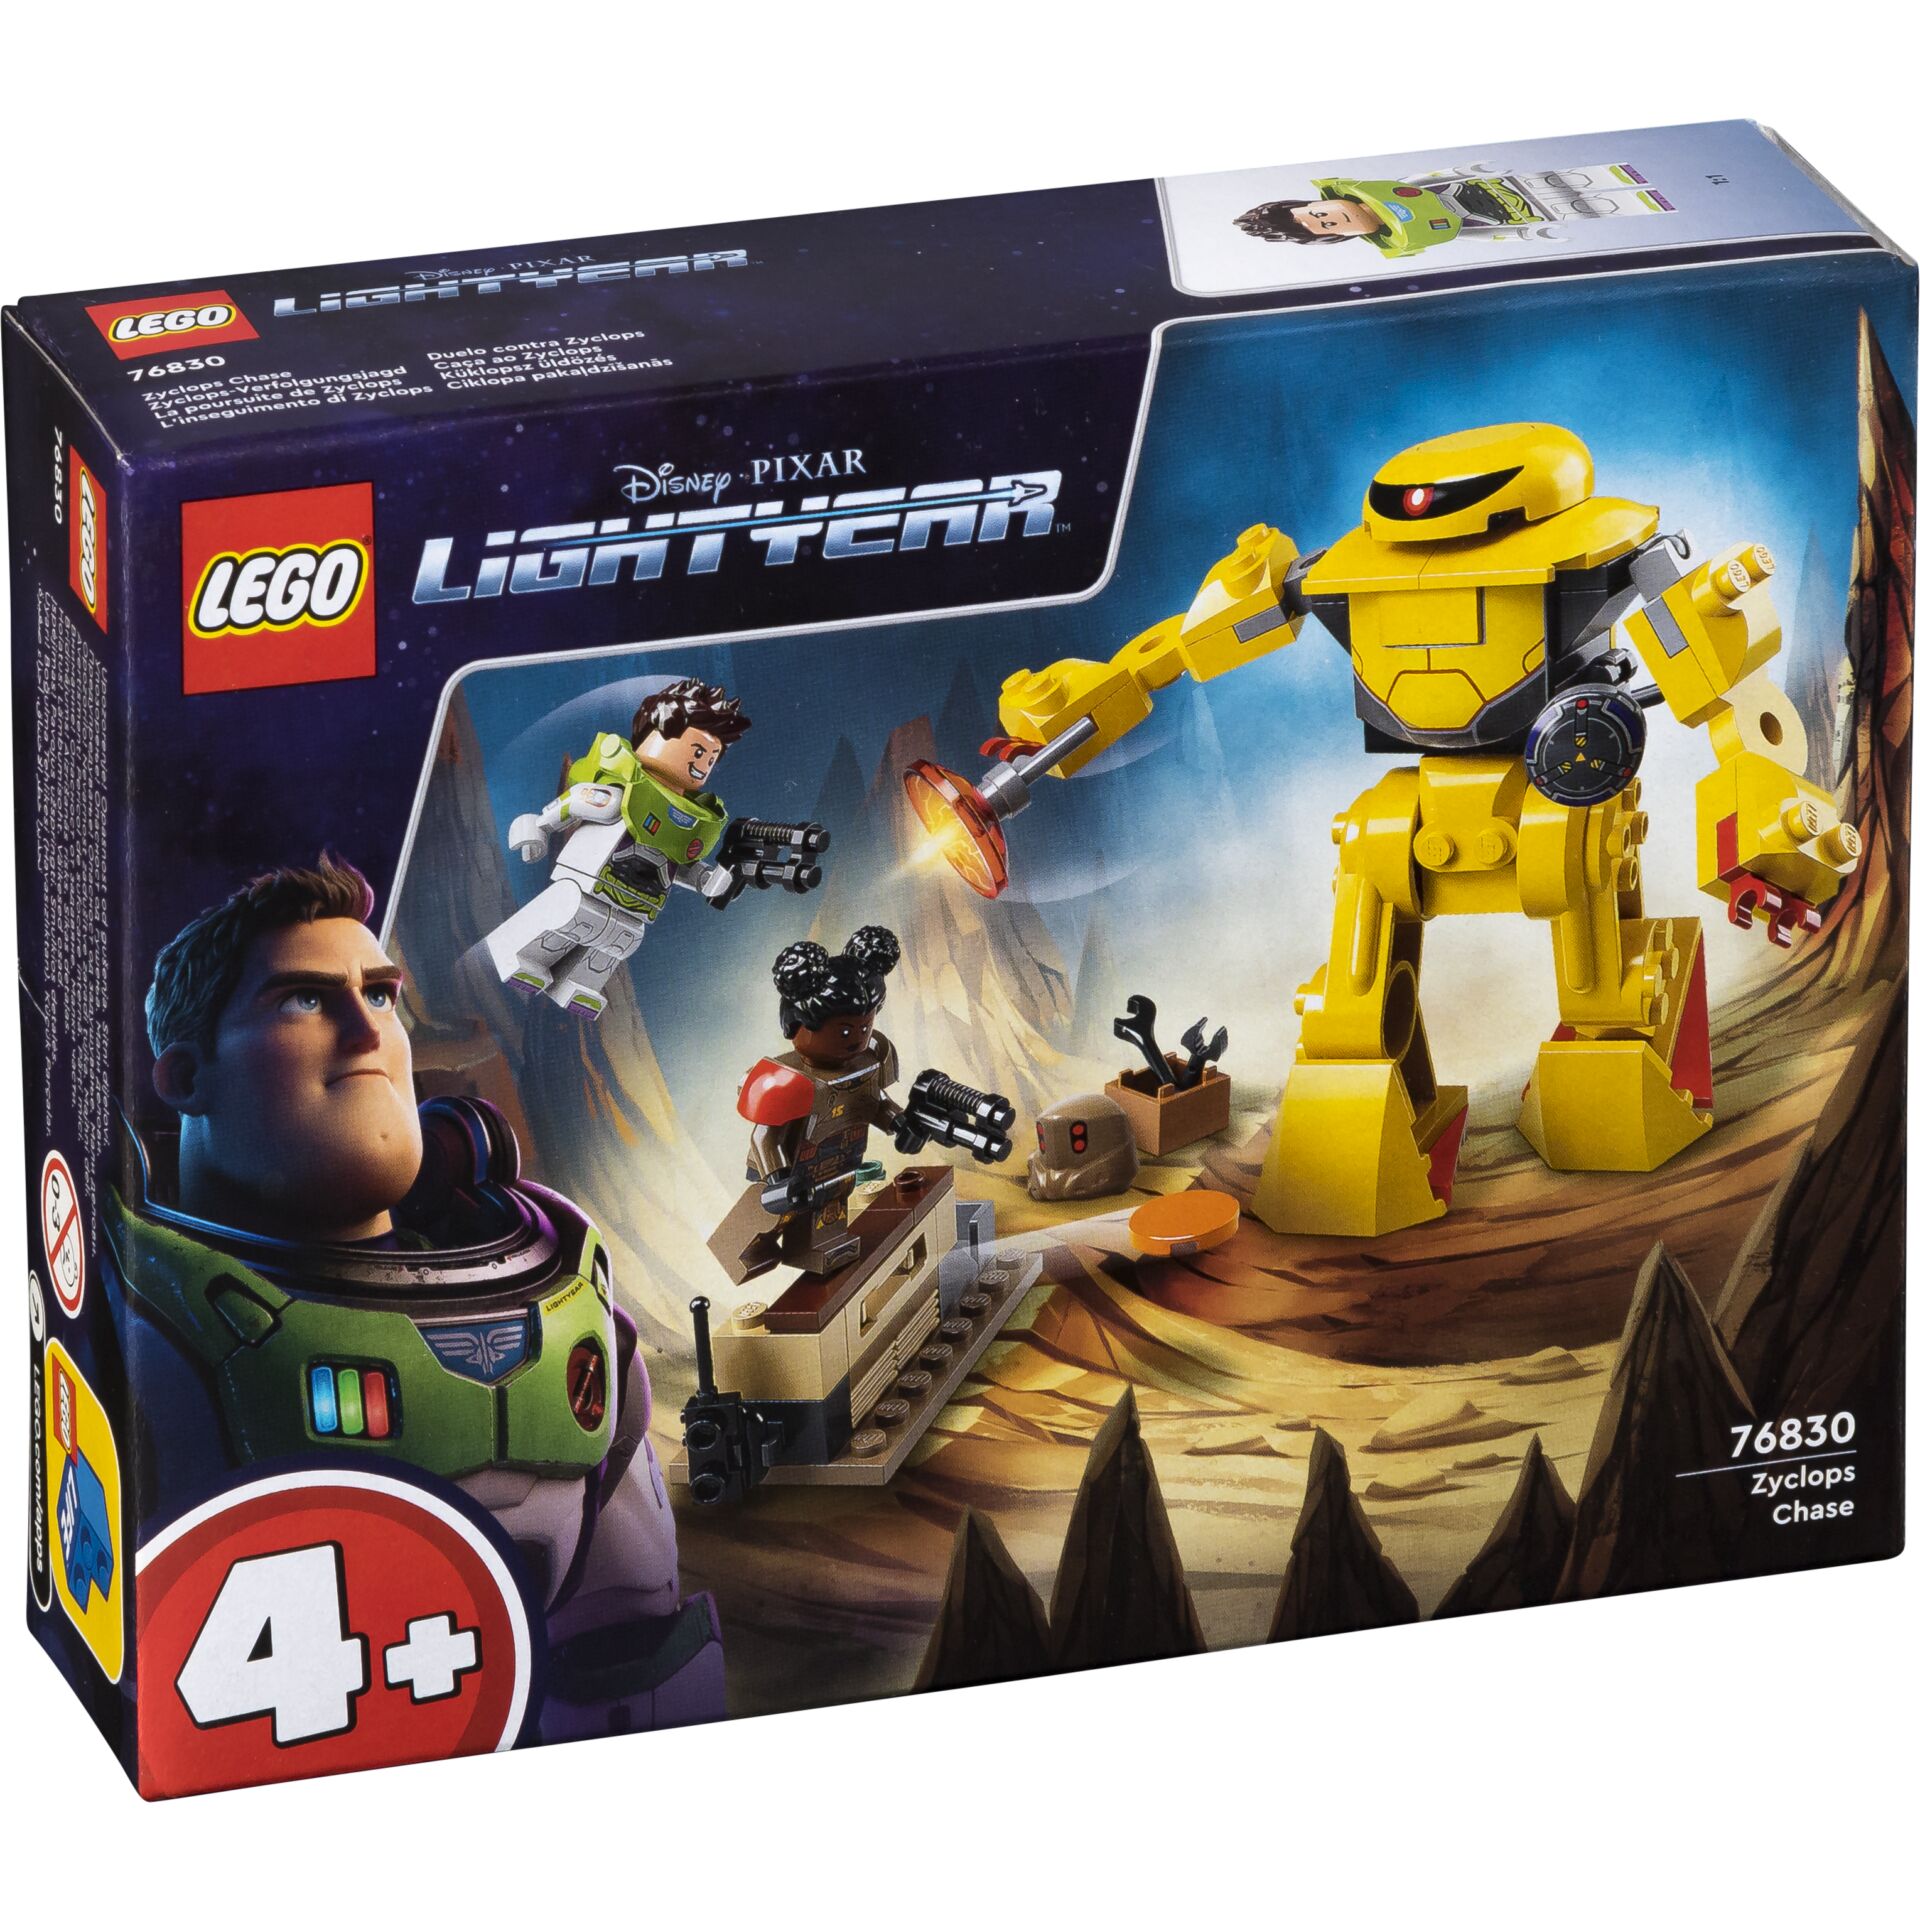 LEGO Lightyear 76830 L'inseguimento di Zyclops